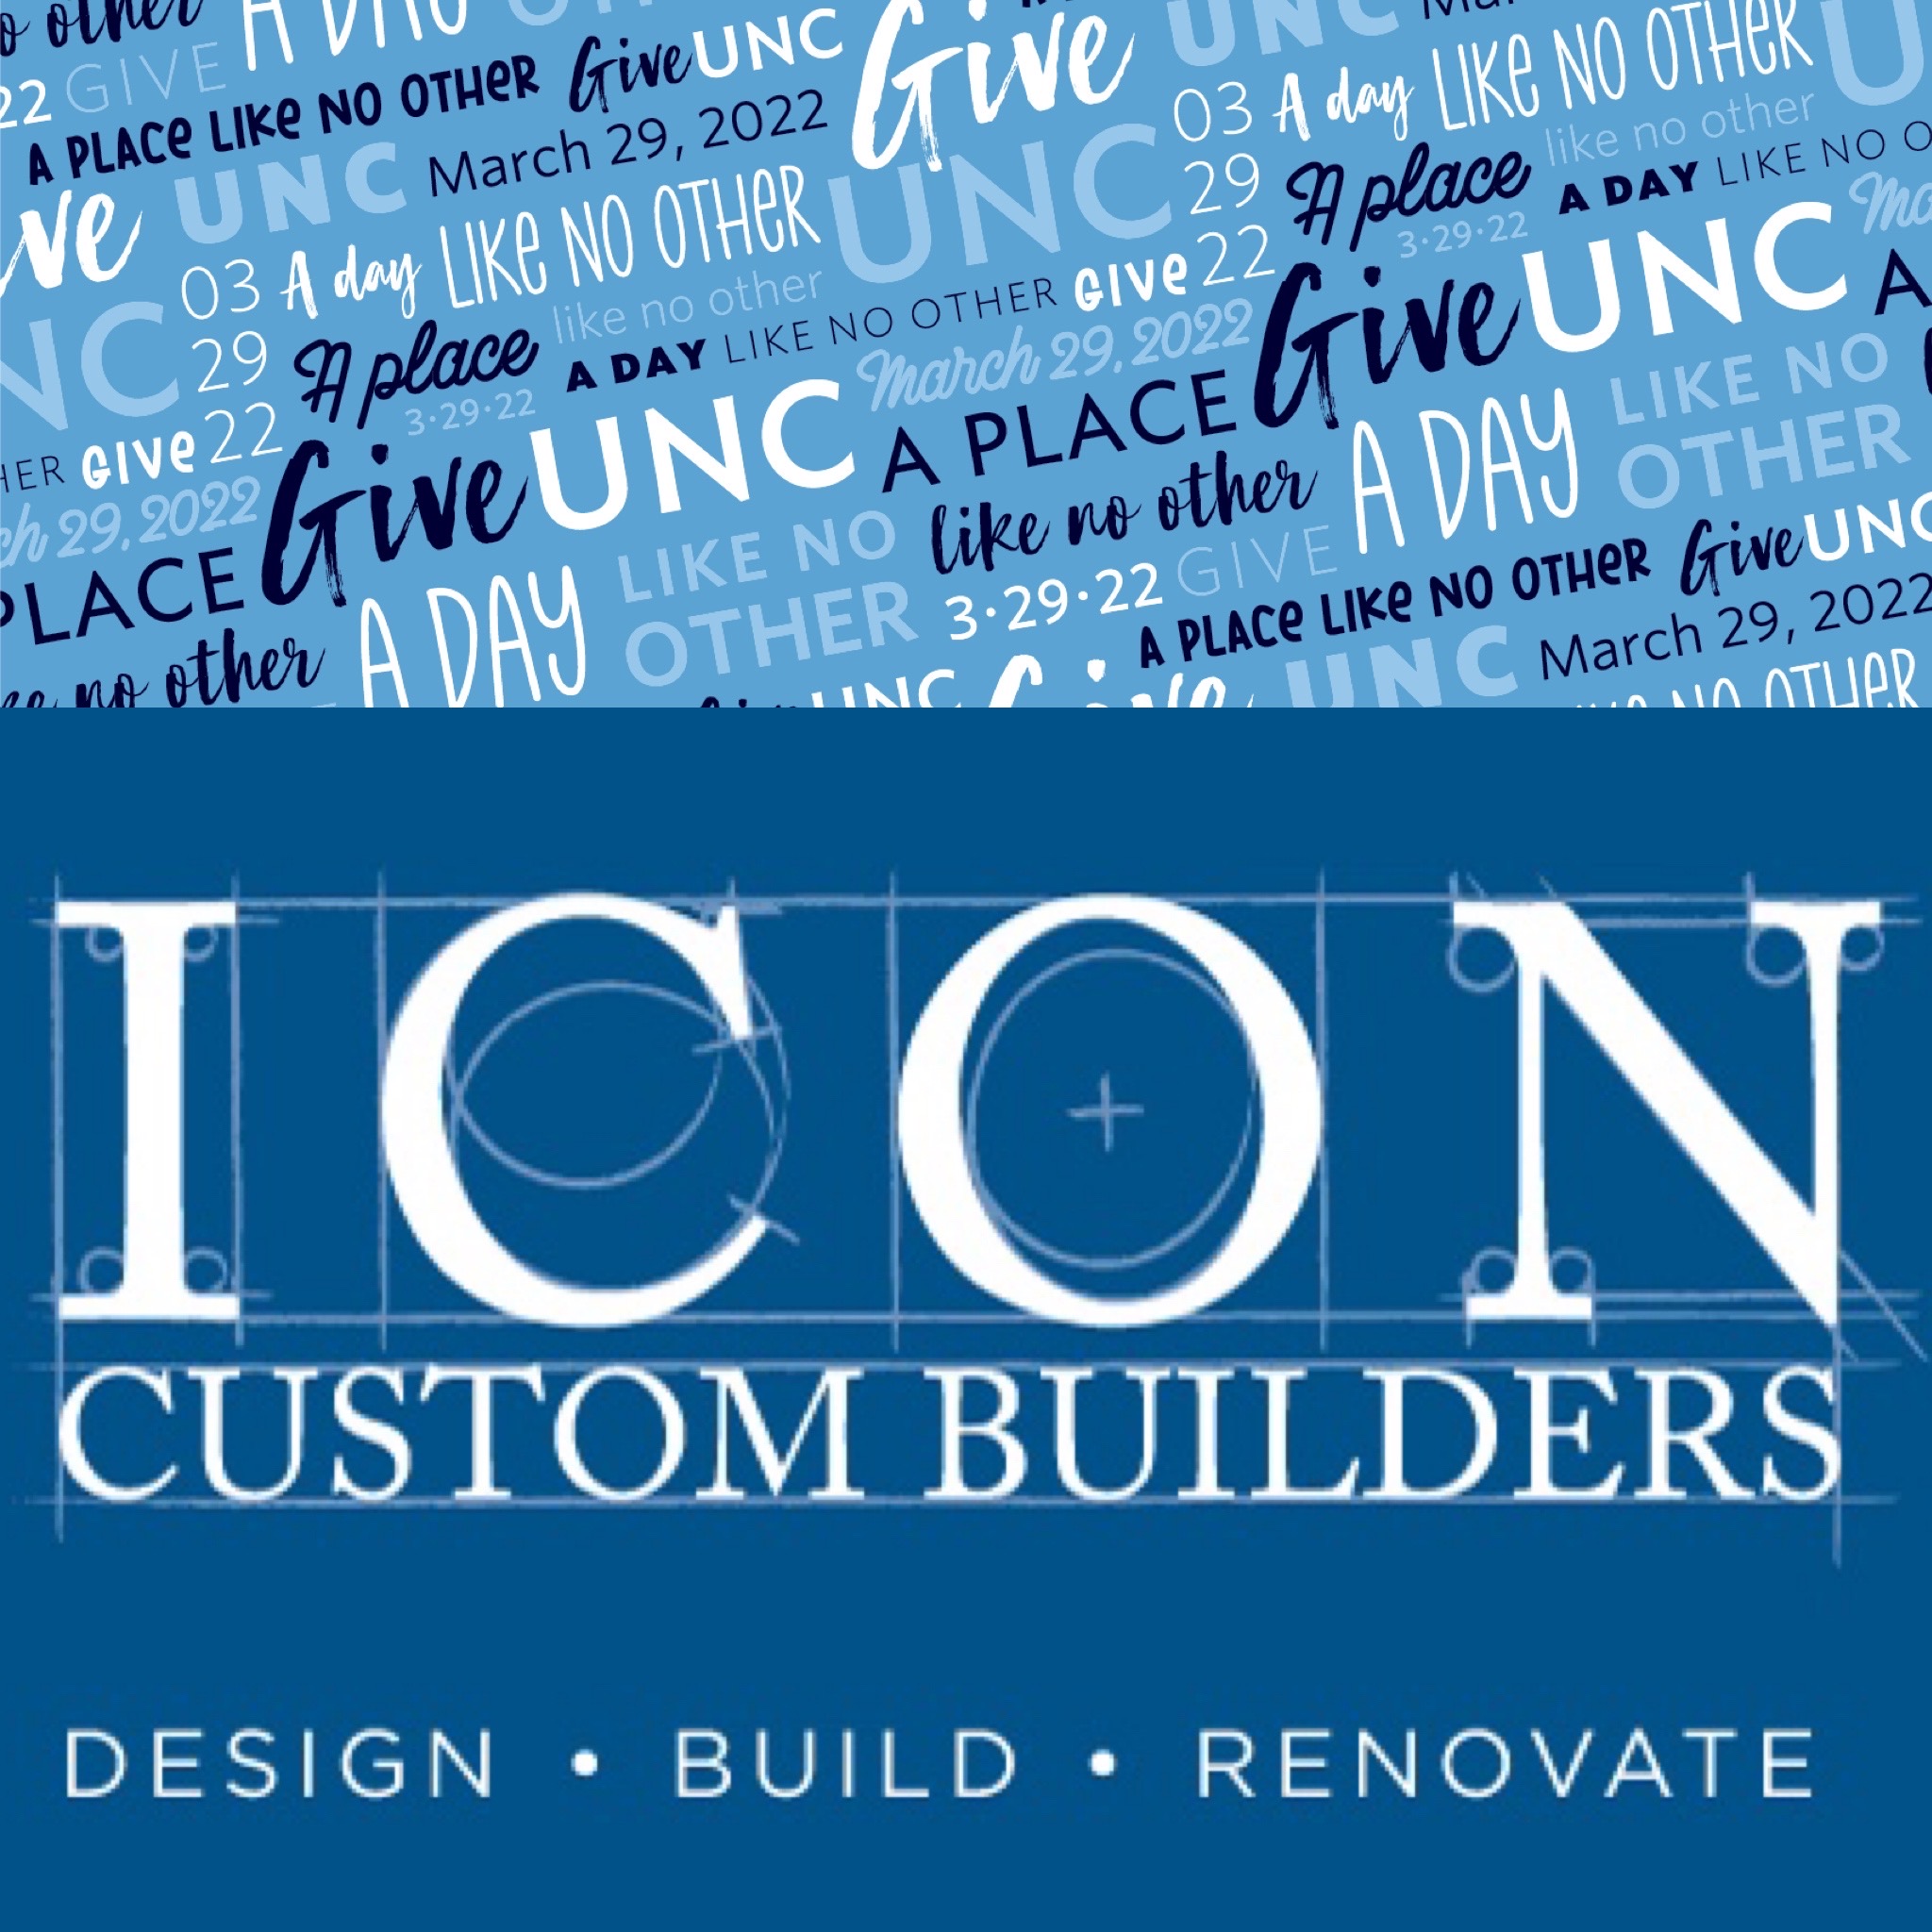 3/29 GiveUNC Featured Sponsor - Icon Custom Builders